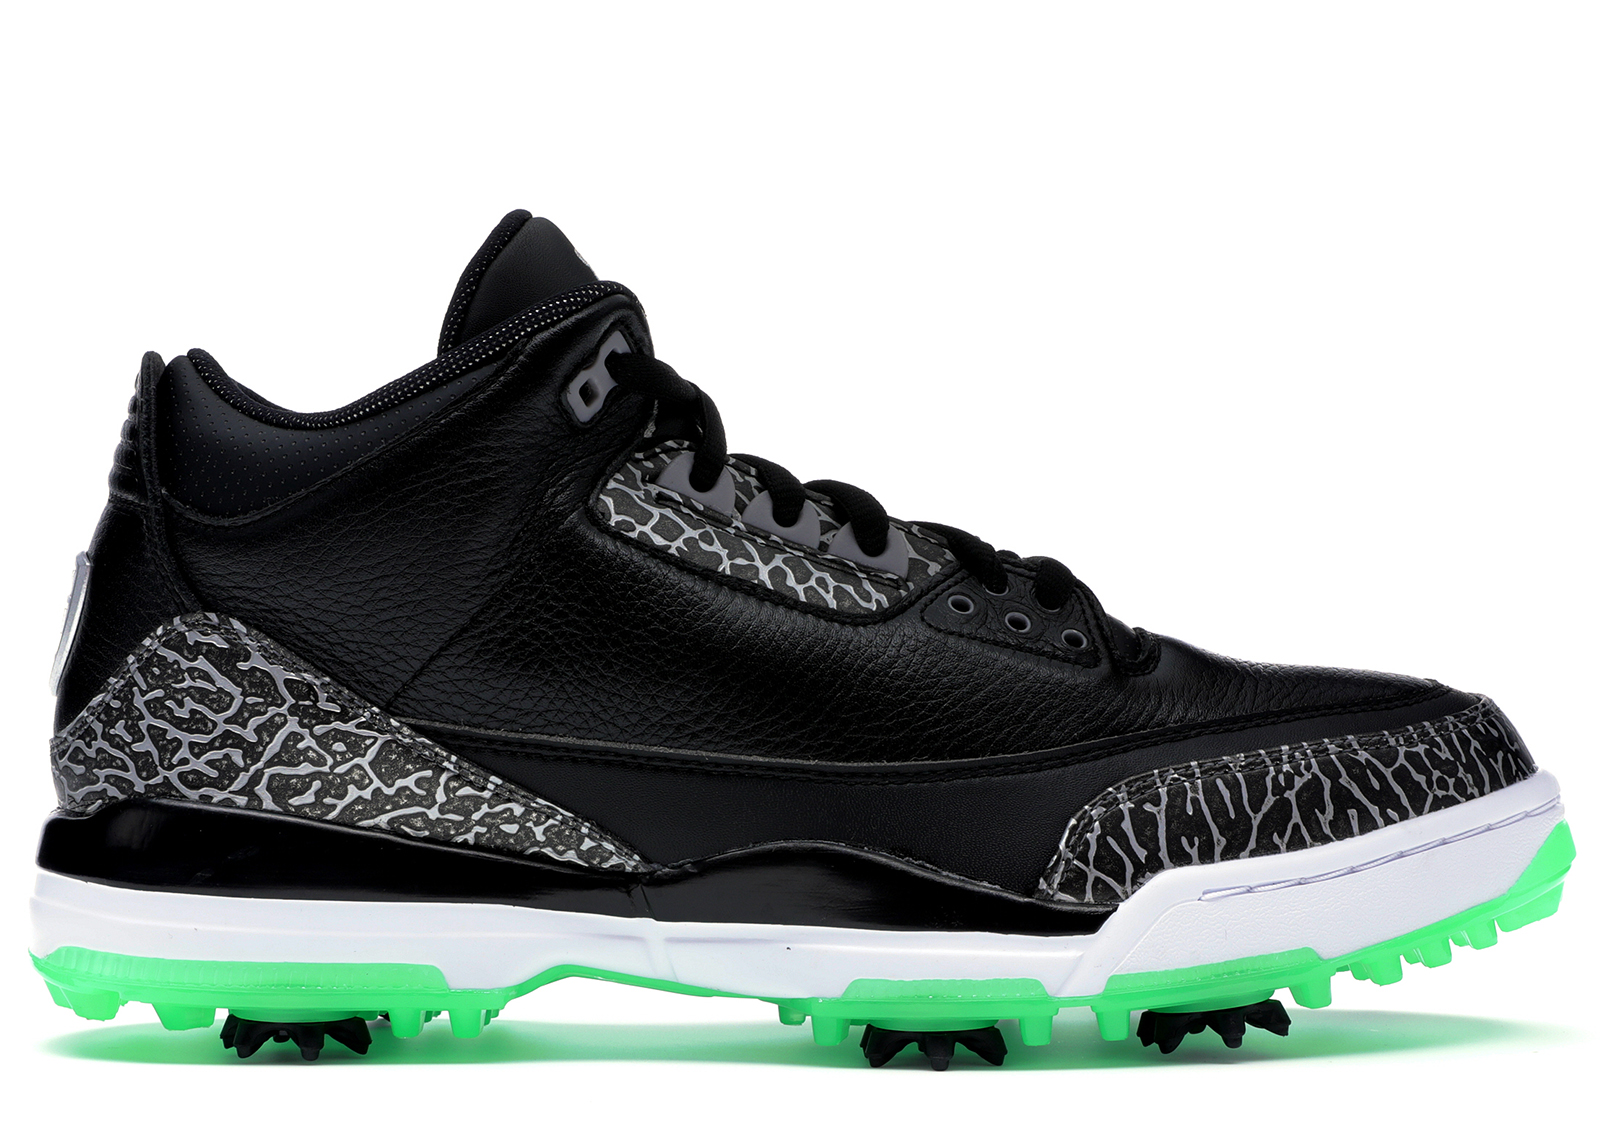 Jordan 3 Retro Golf Black Green Glow